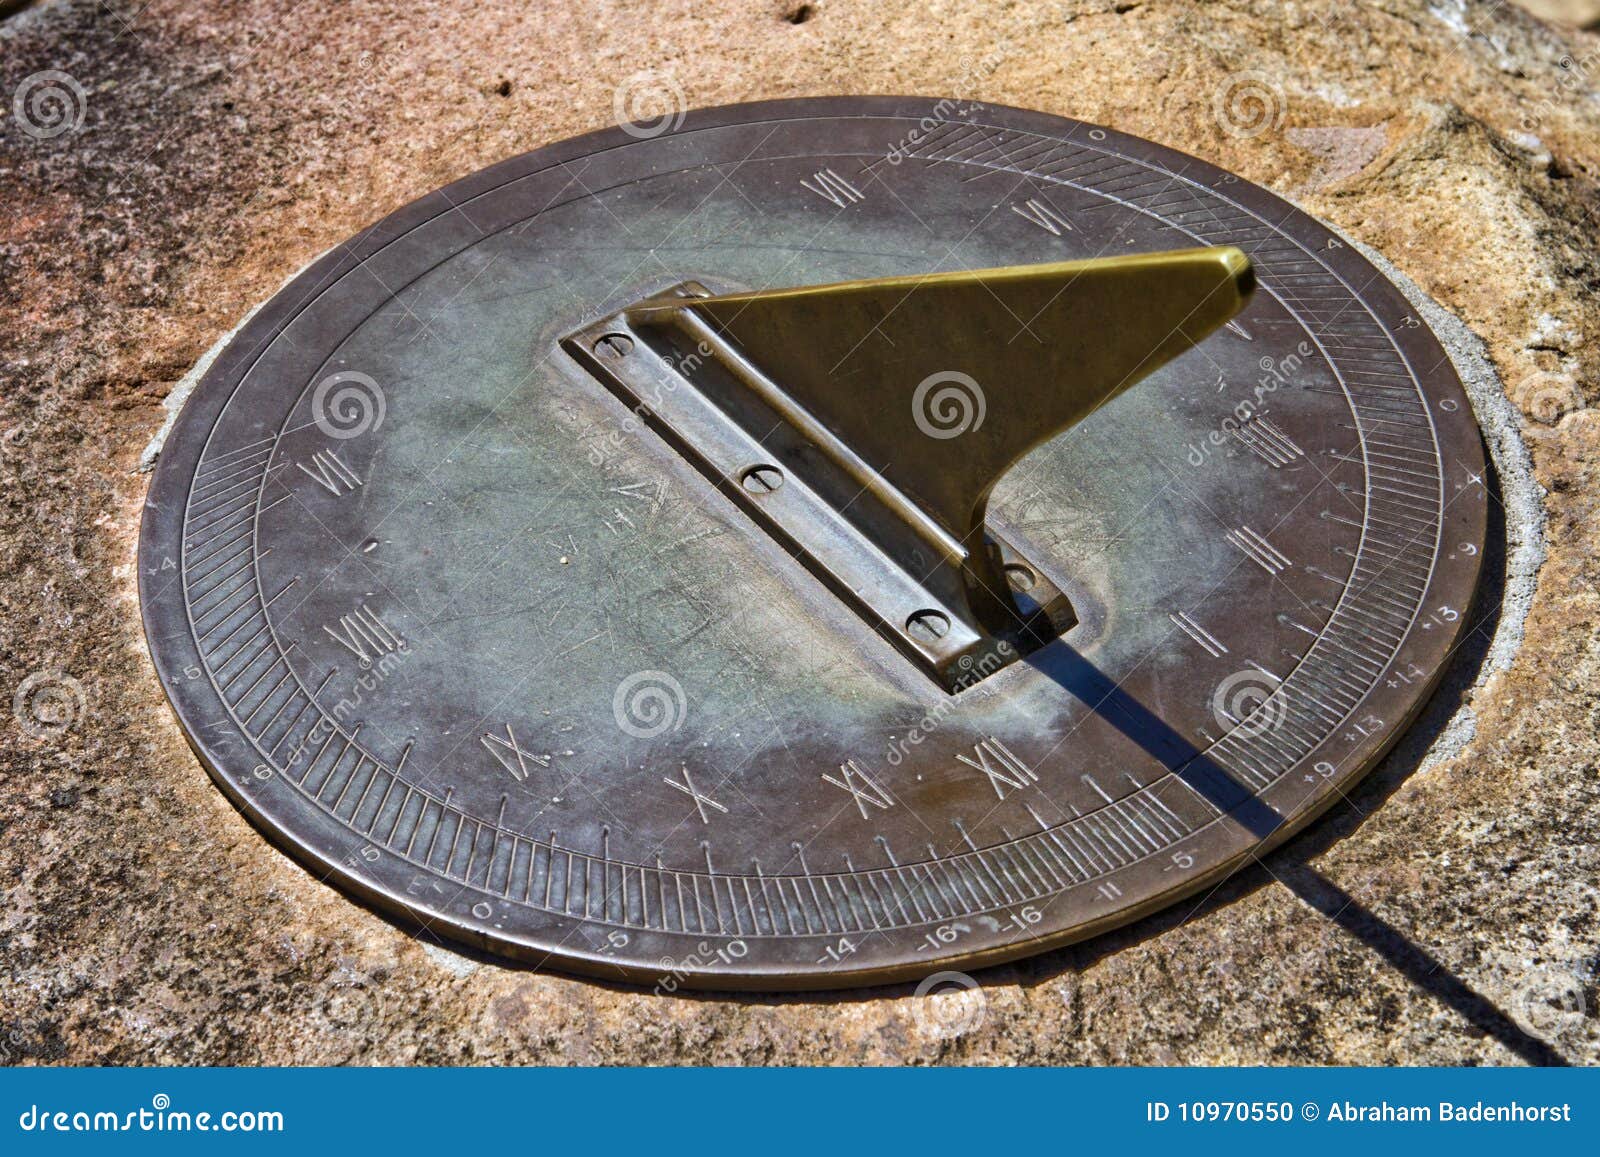 a horizontal sundial